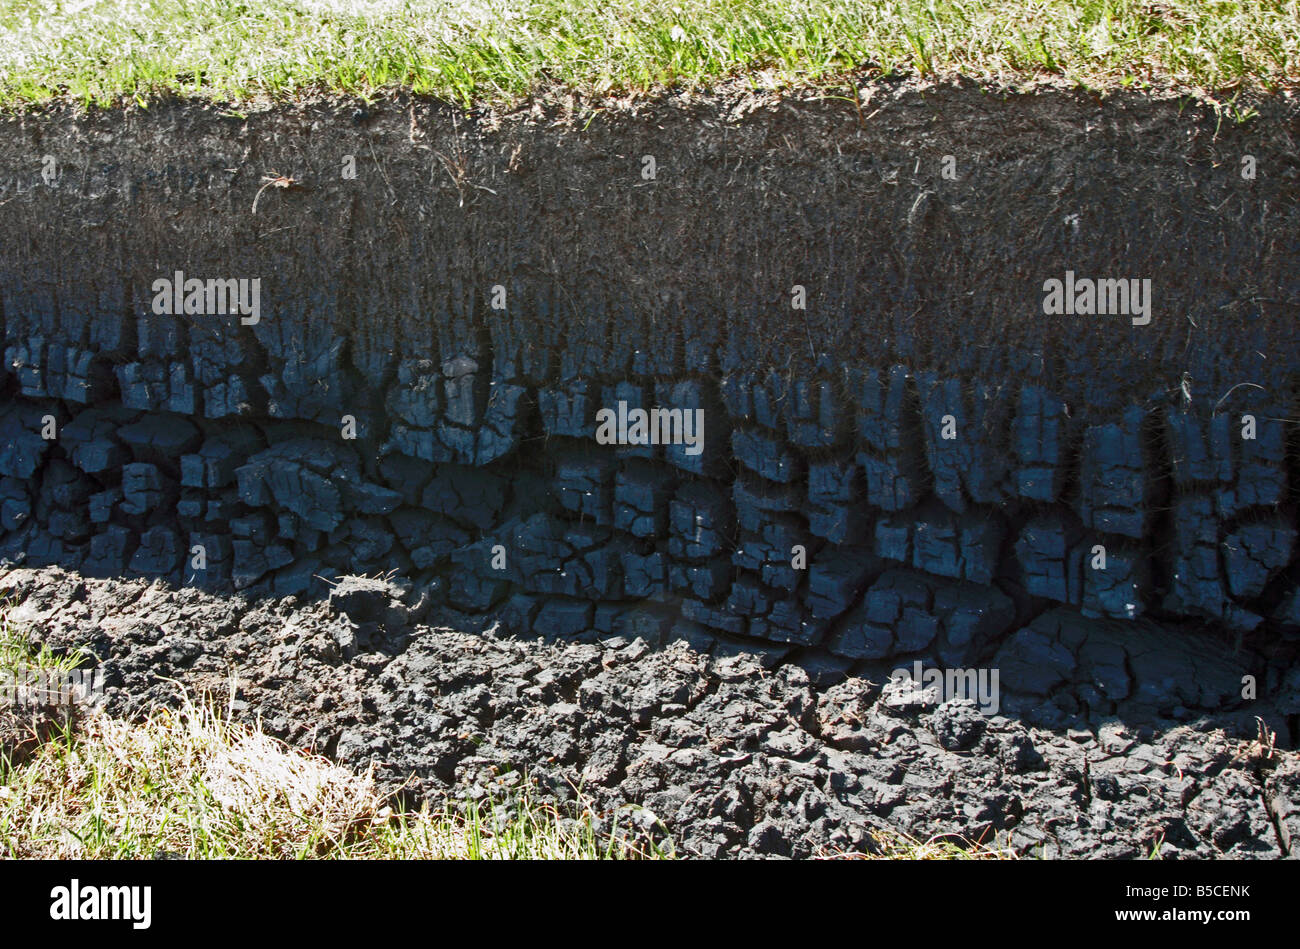 Peat cutting in scotland Stock Photo